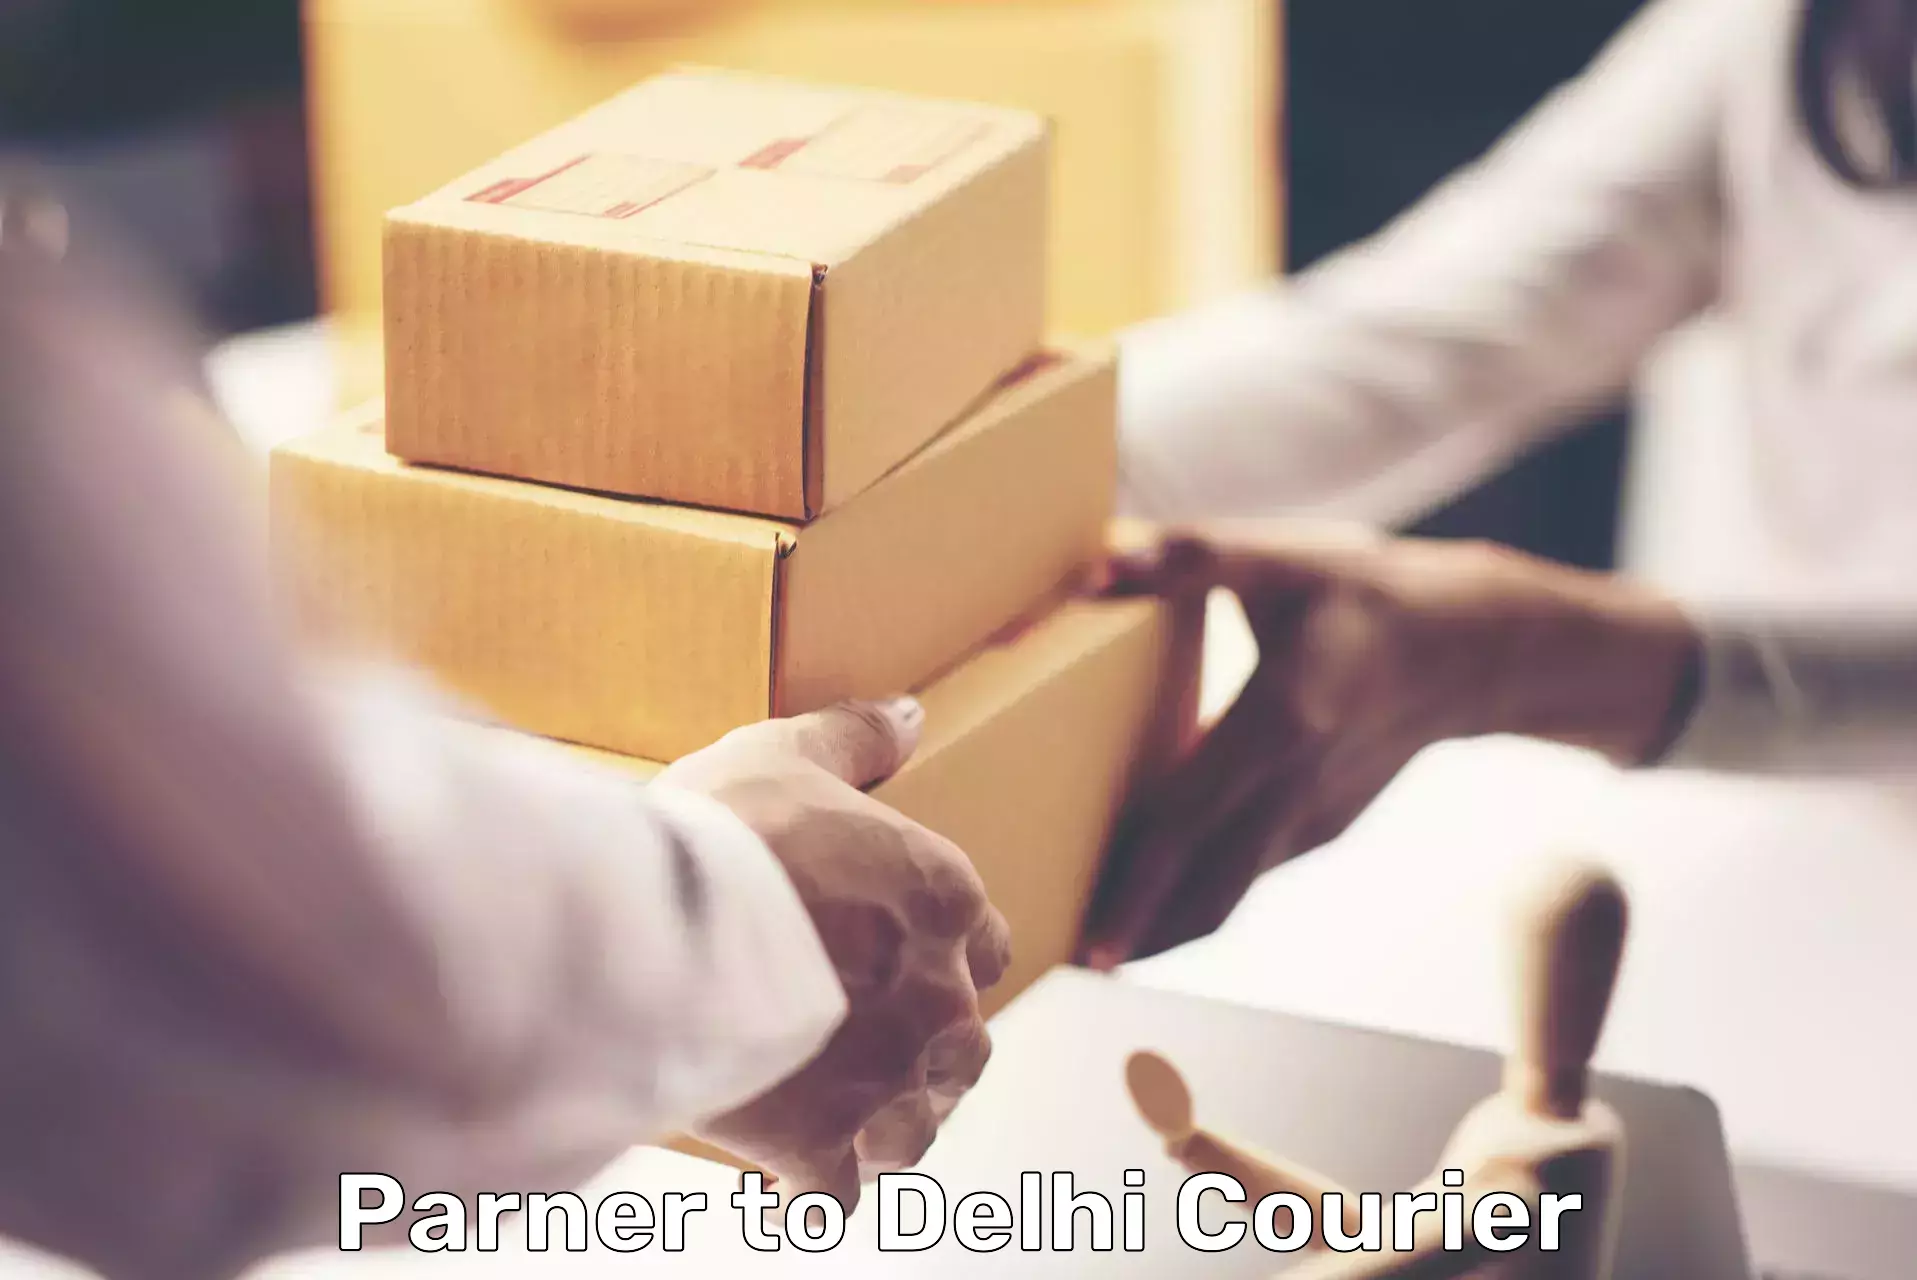 Speedy delivery service Parner to Delhi